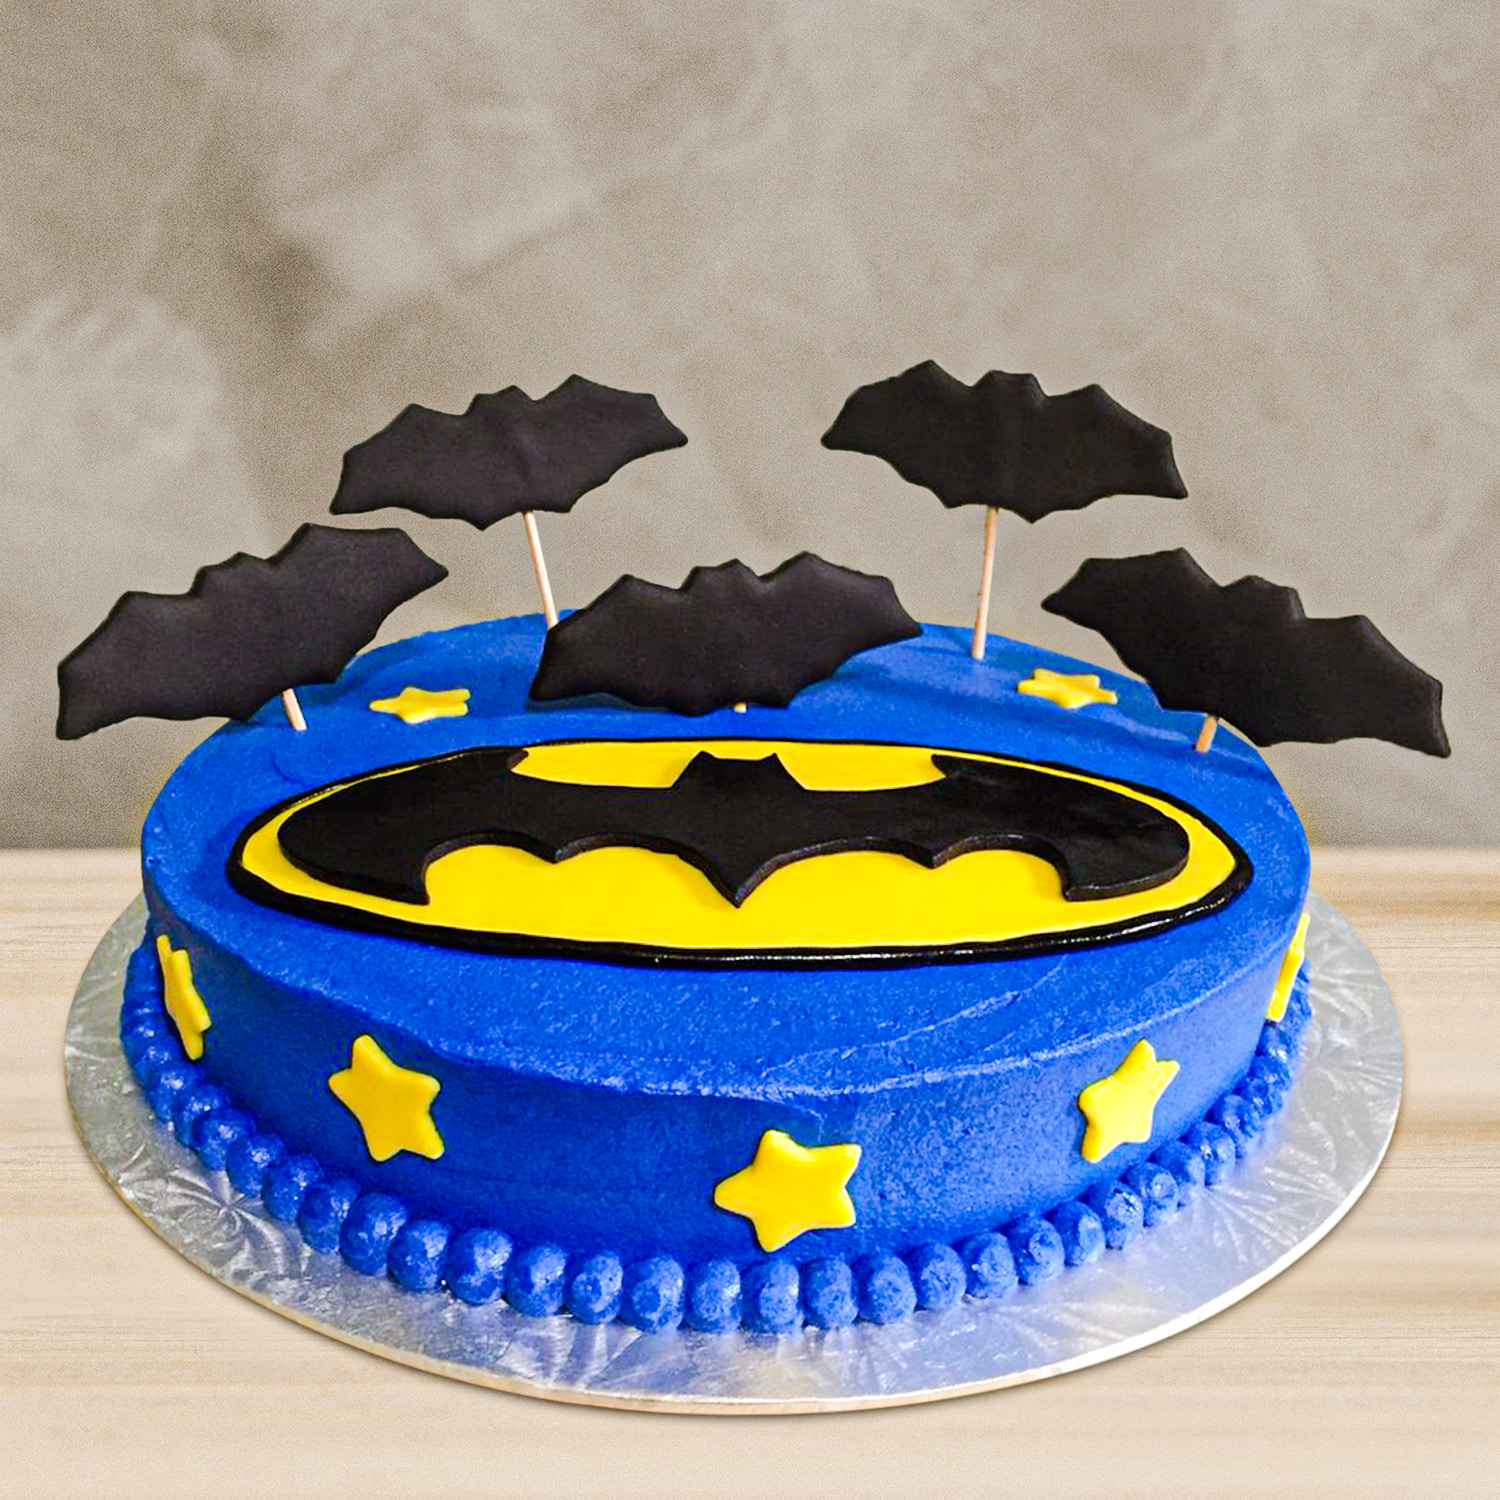 Batman Birthday Cake - Buttercream Frosting - YouTube